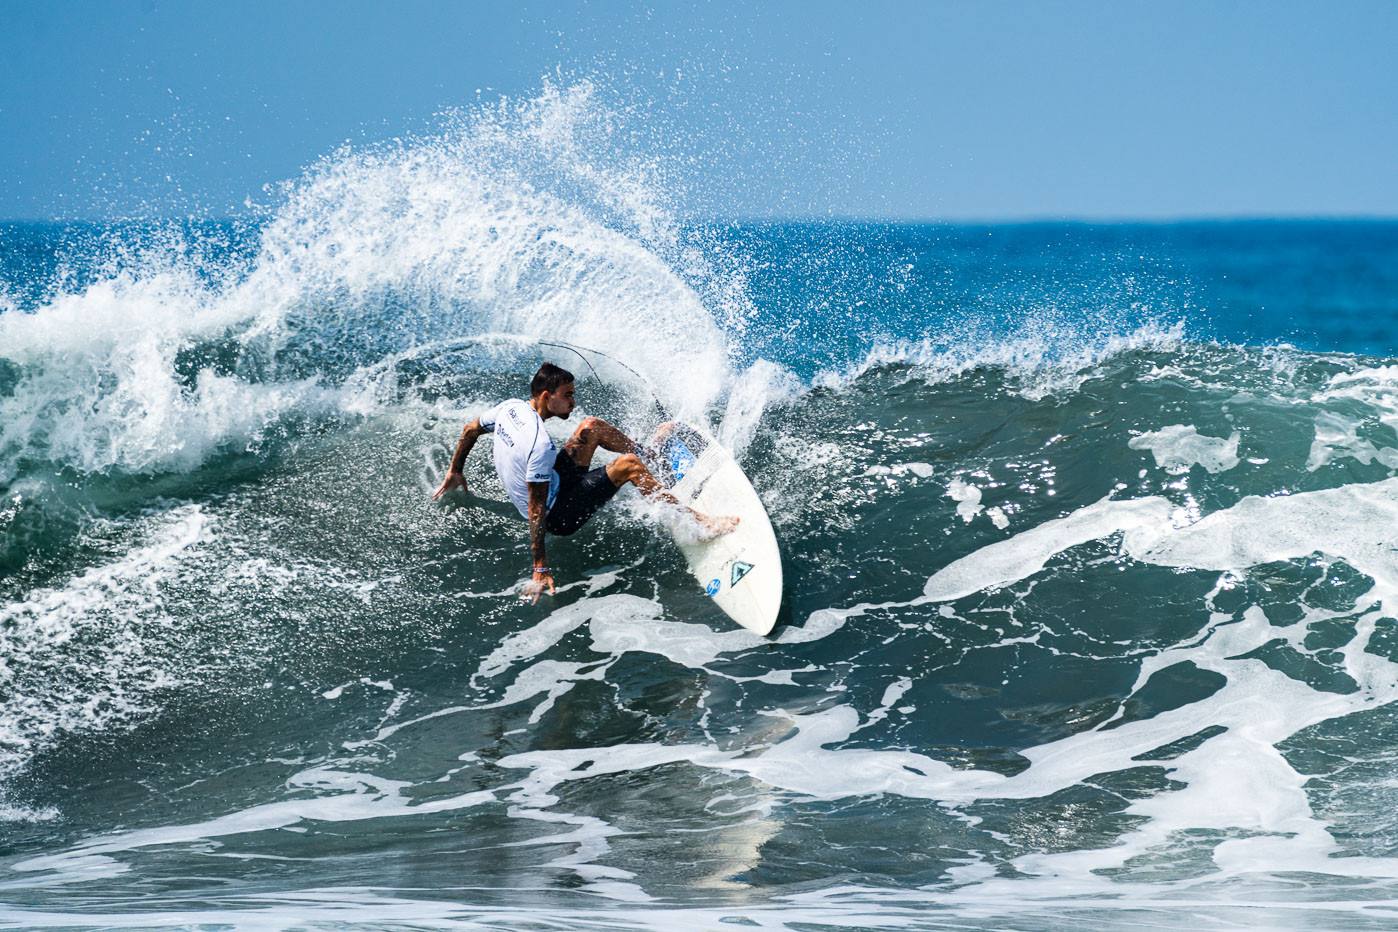 World Surfing Games continues at El Salvador's Surf City